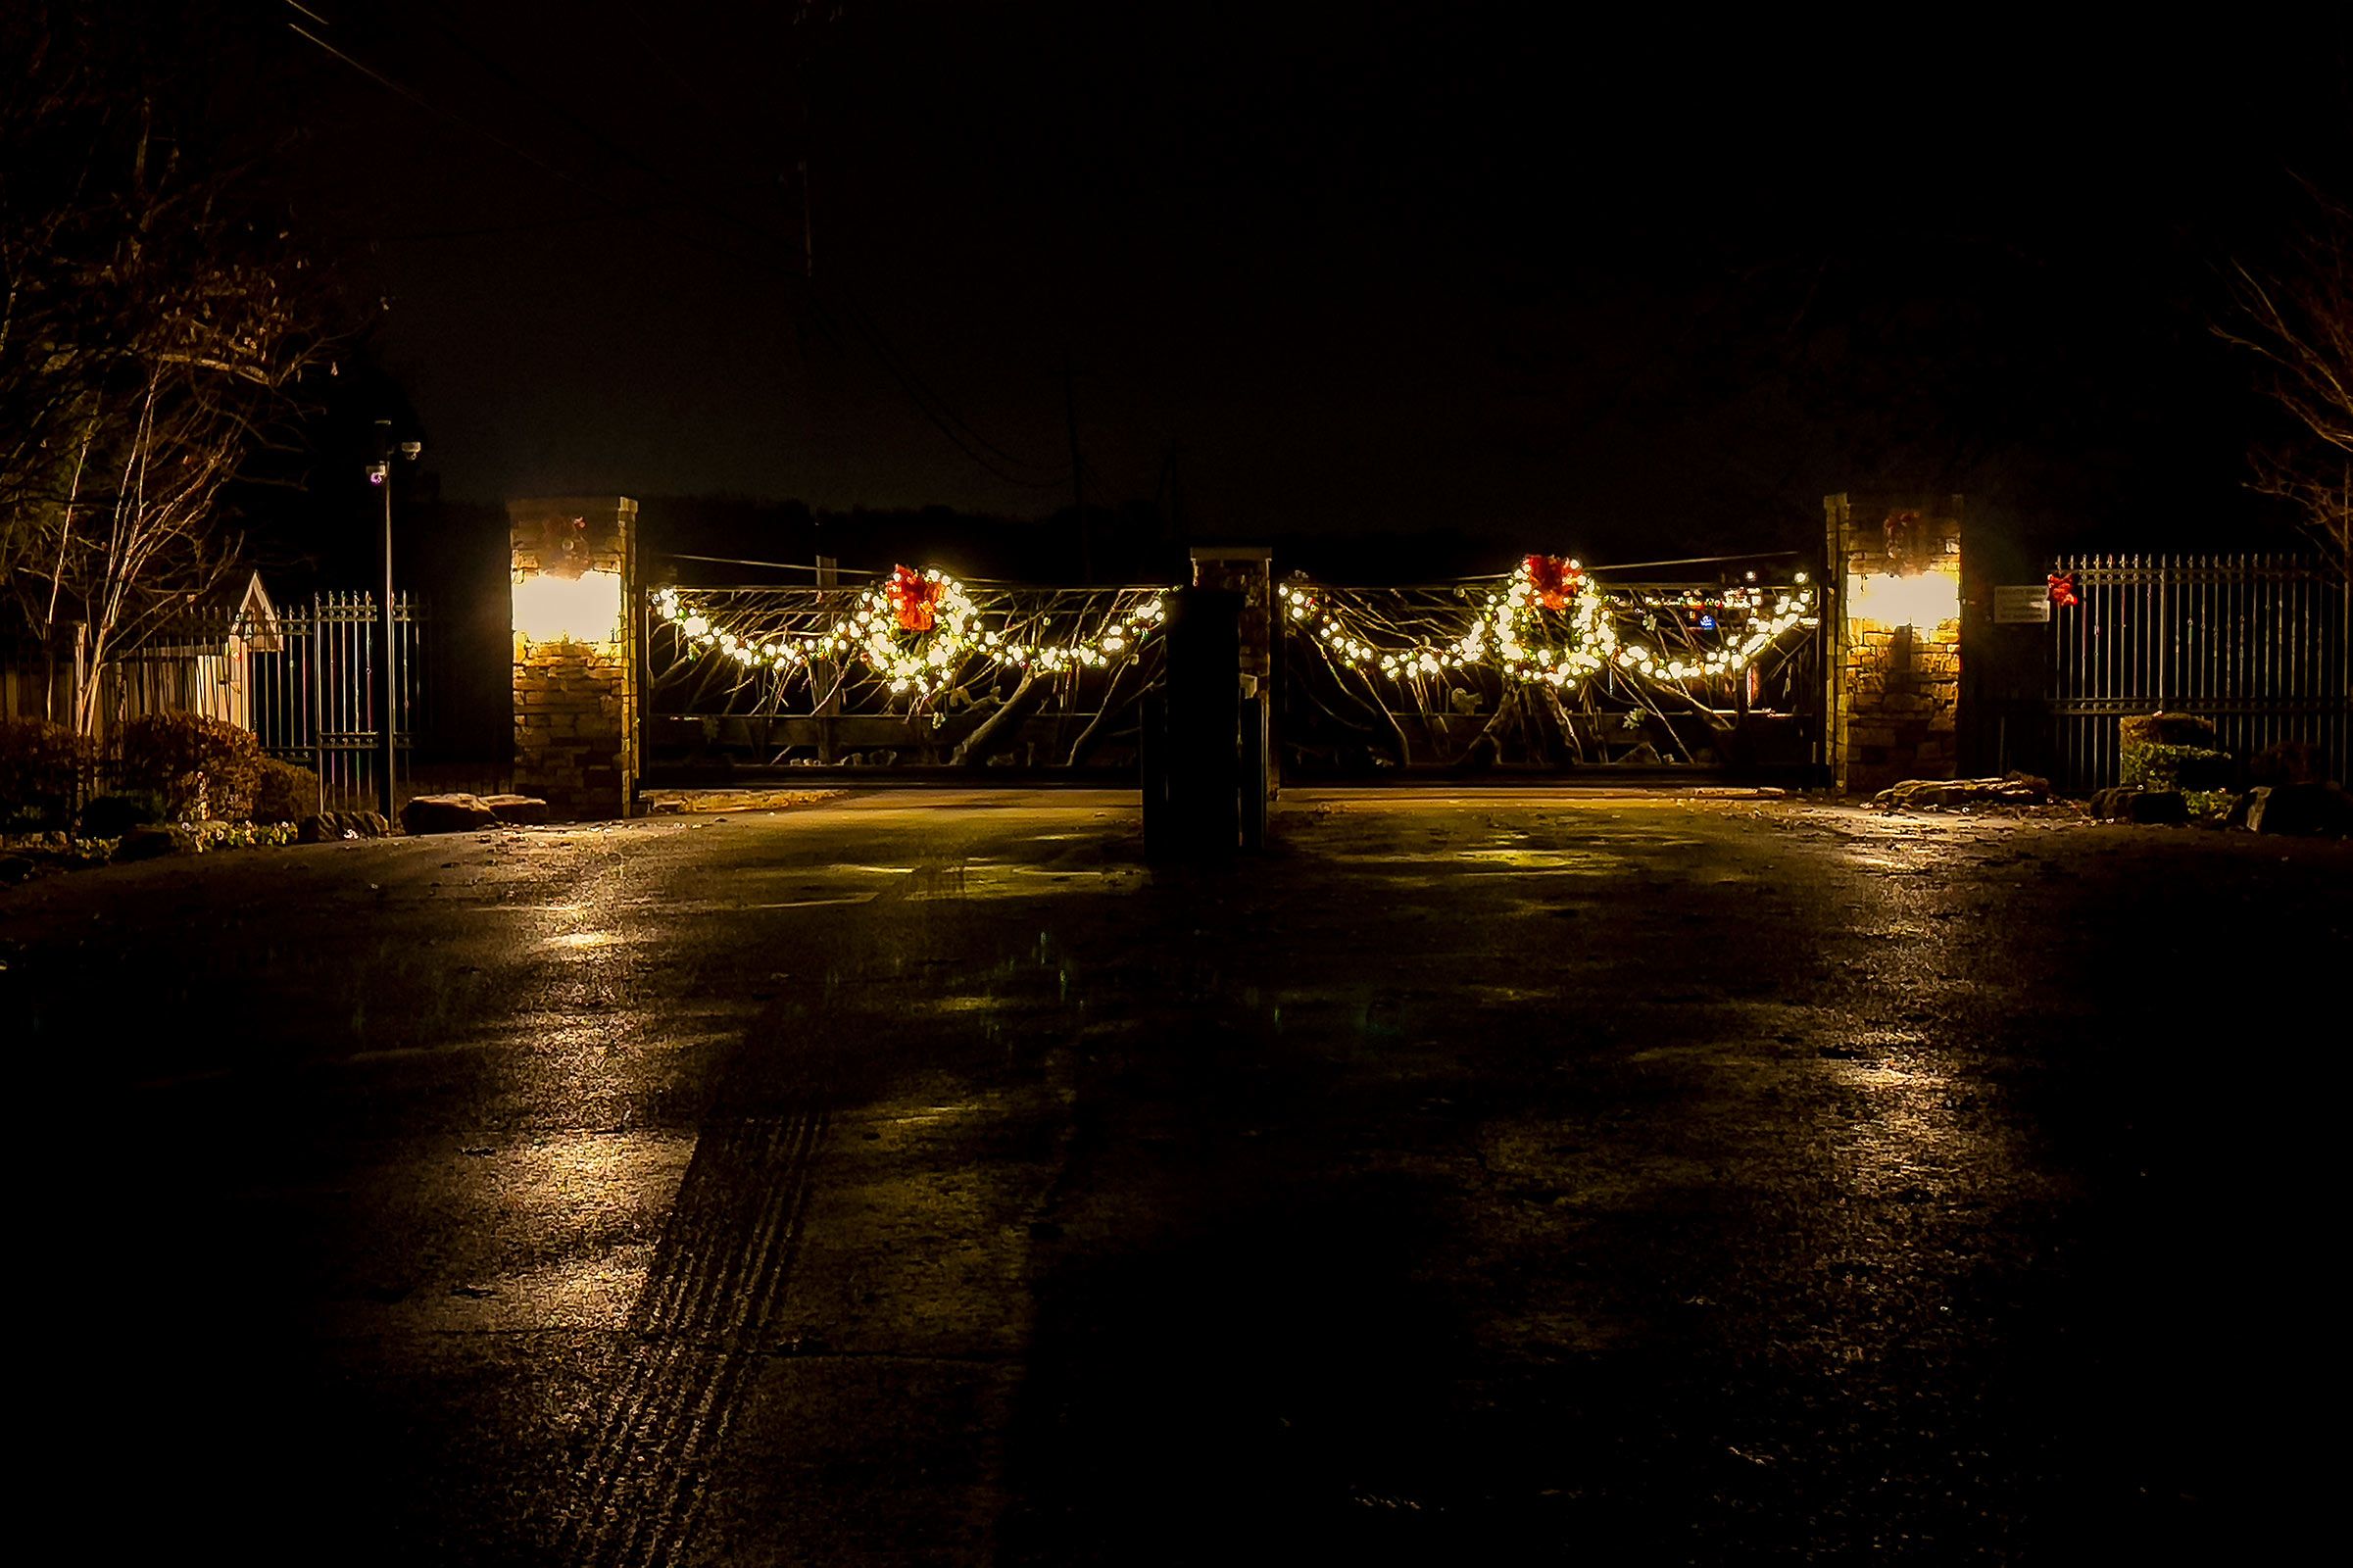 Gates with Christmas lights